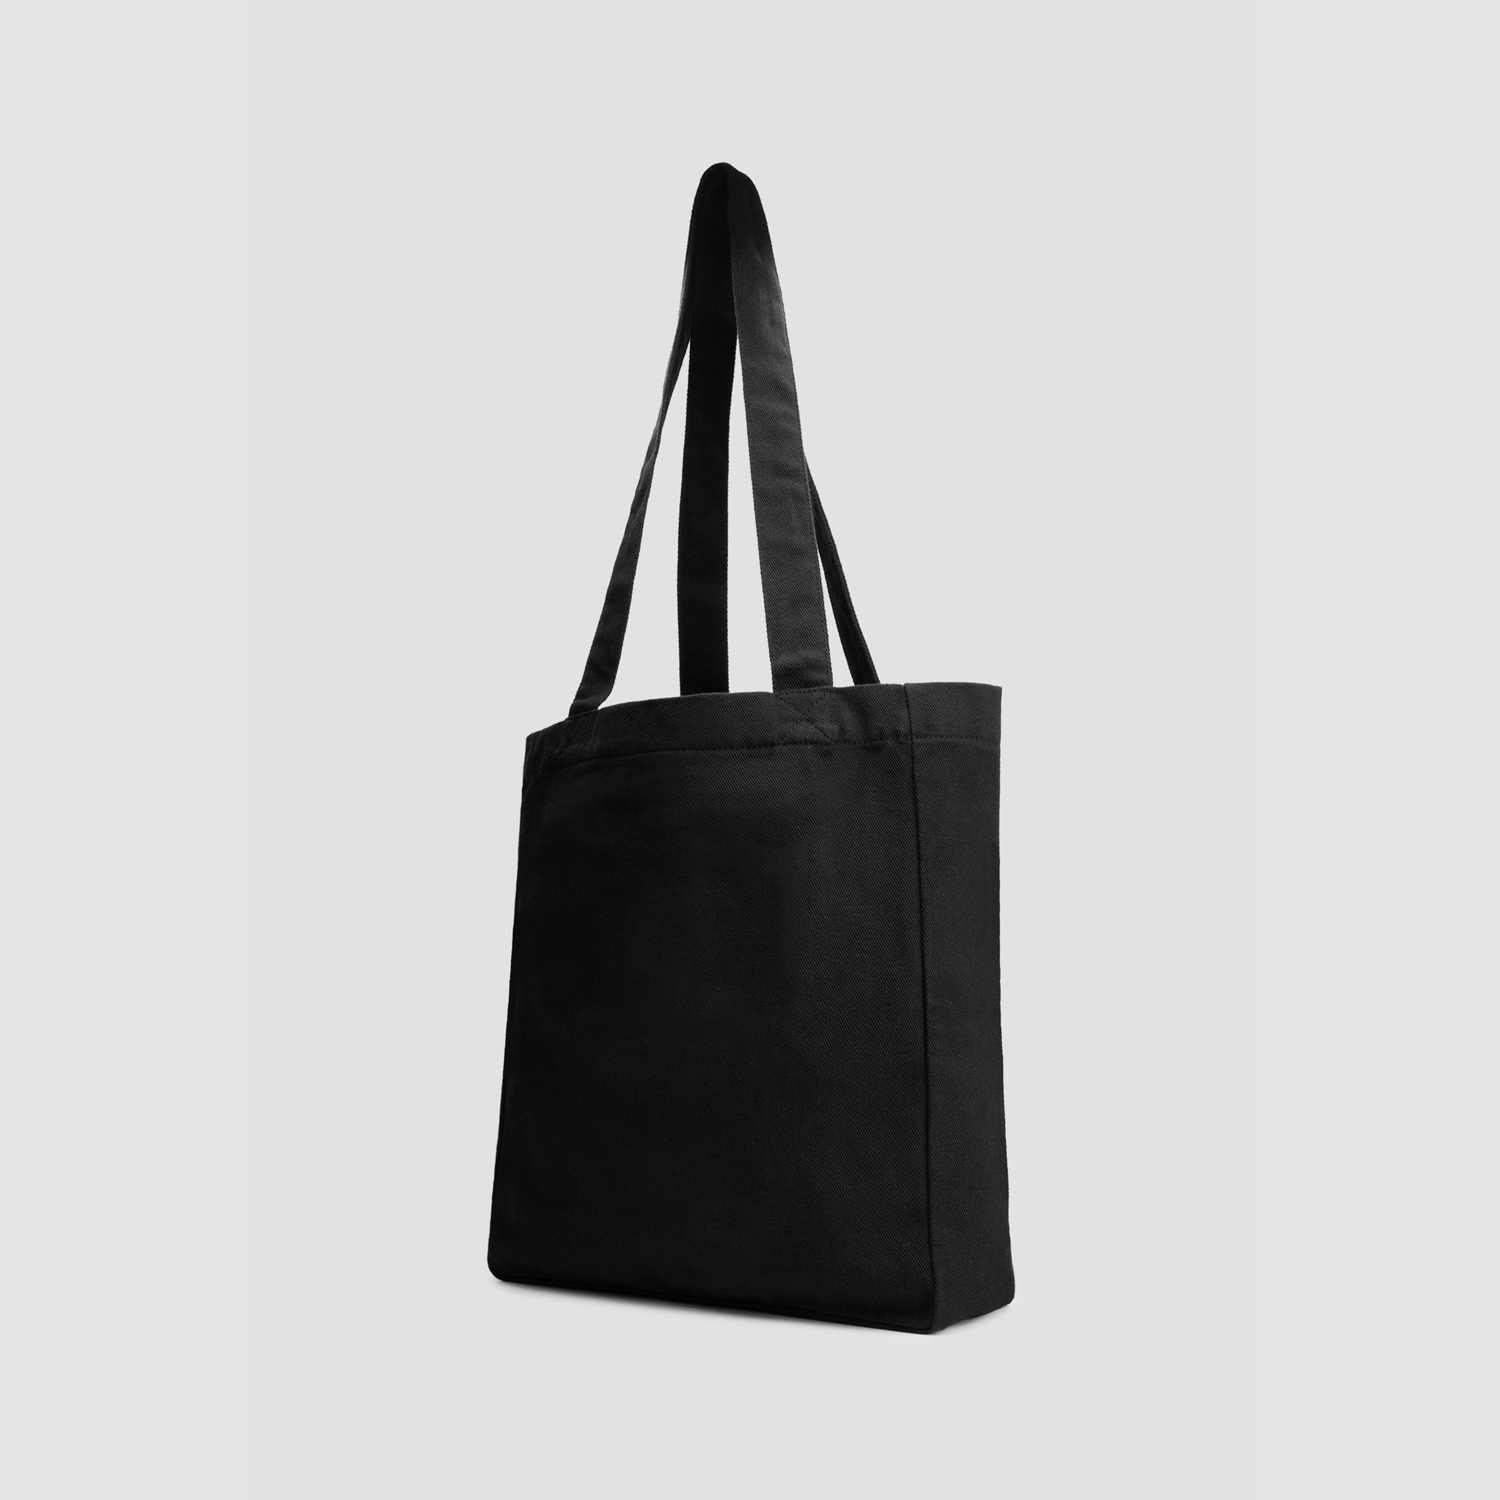 ØLÅF Medium Tote Bag - Black